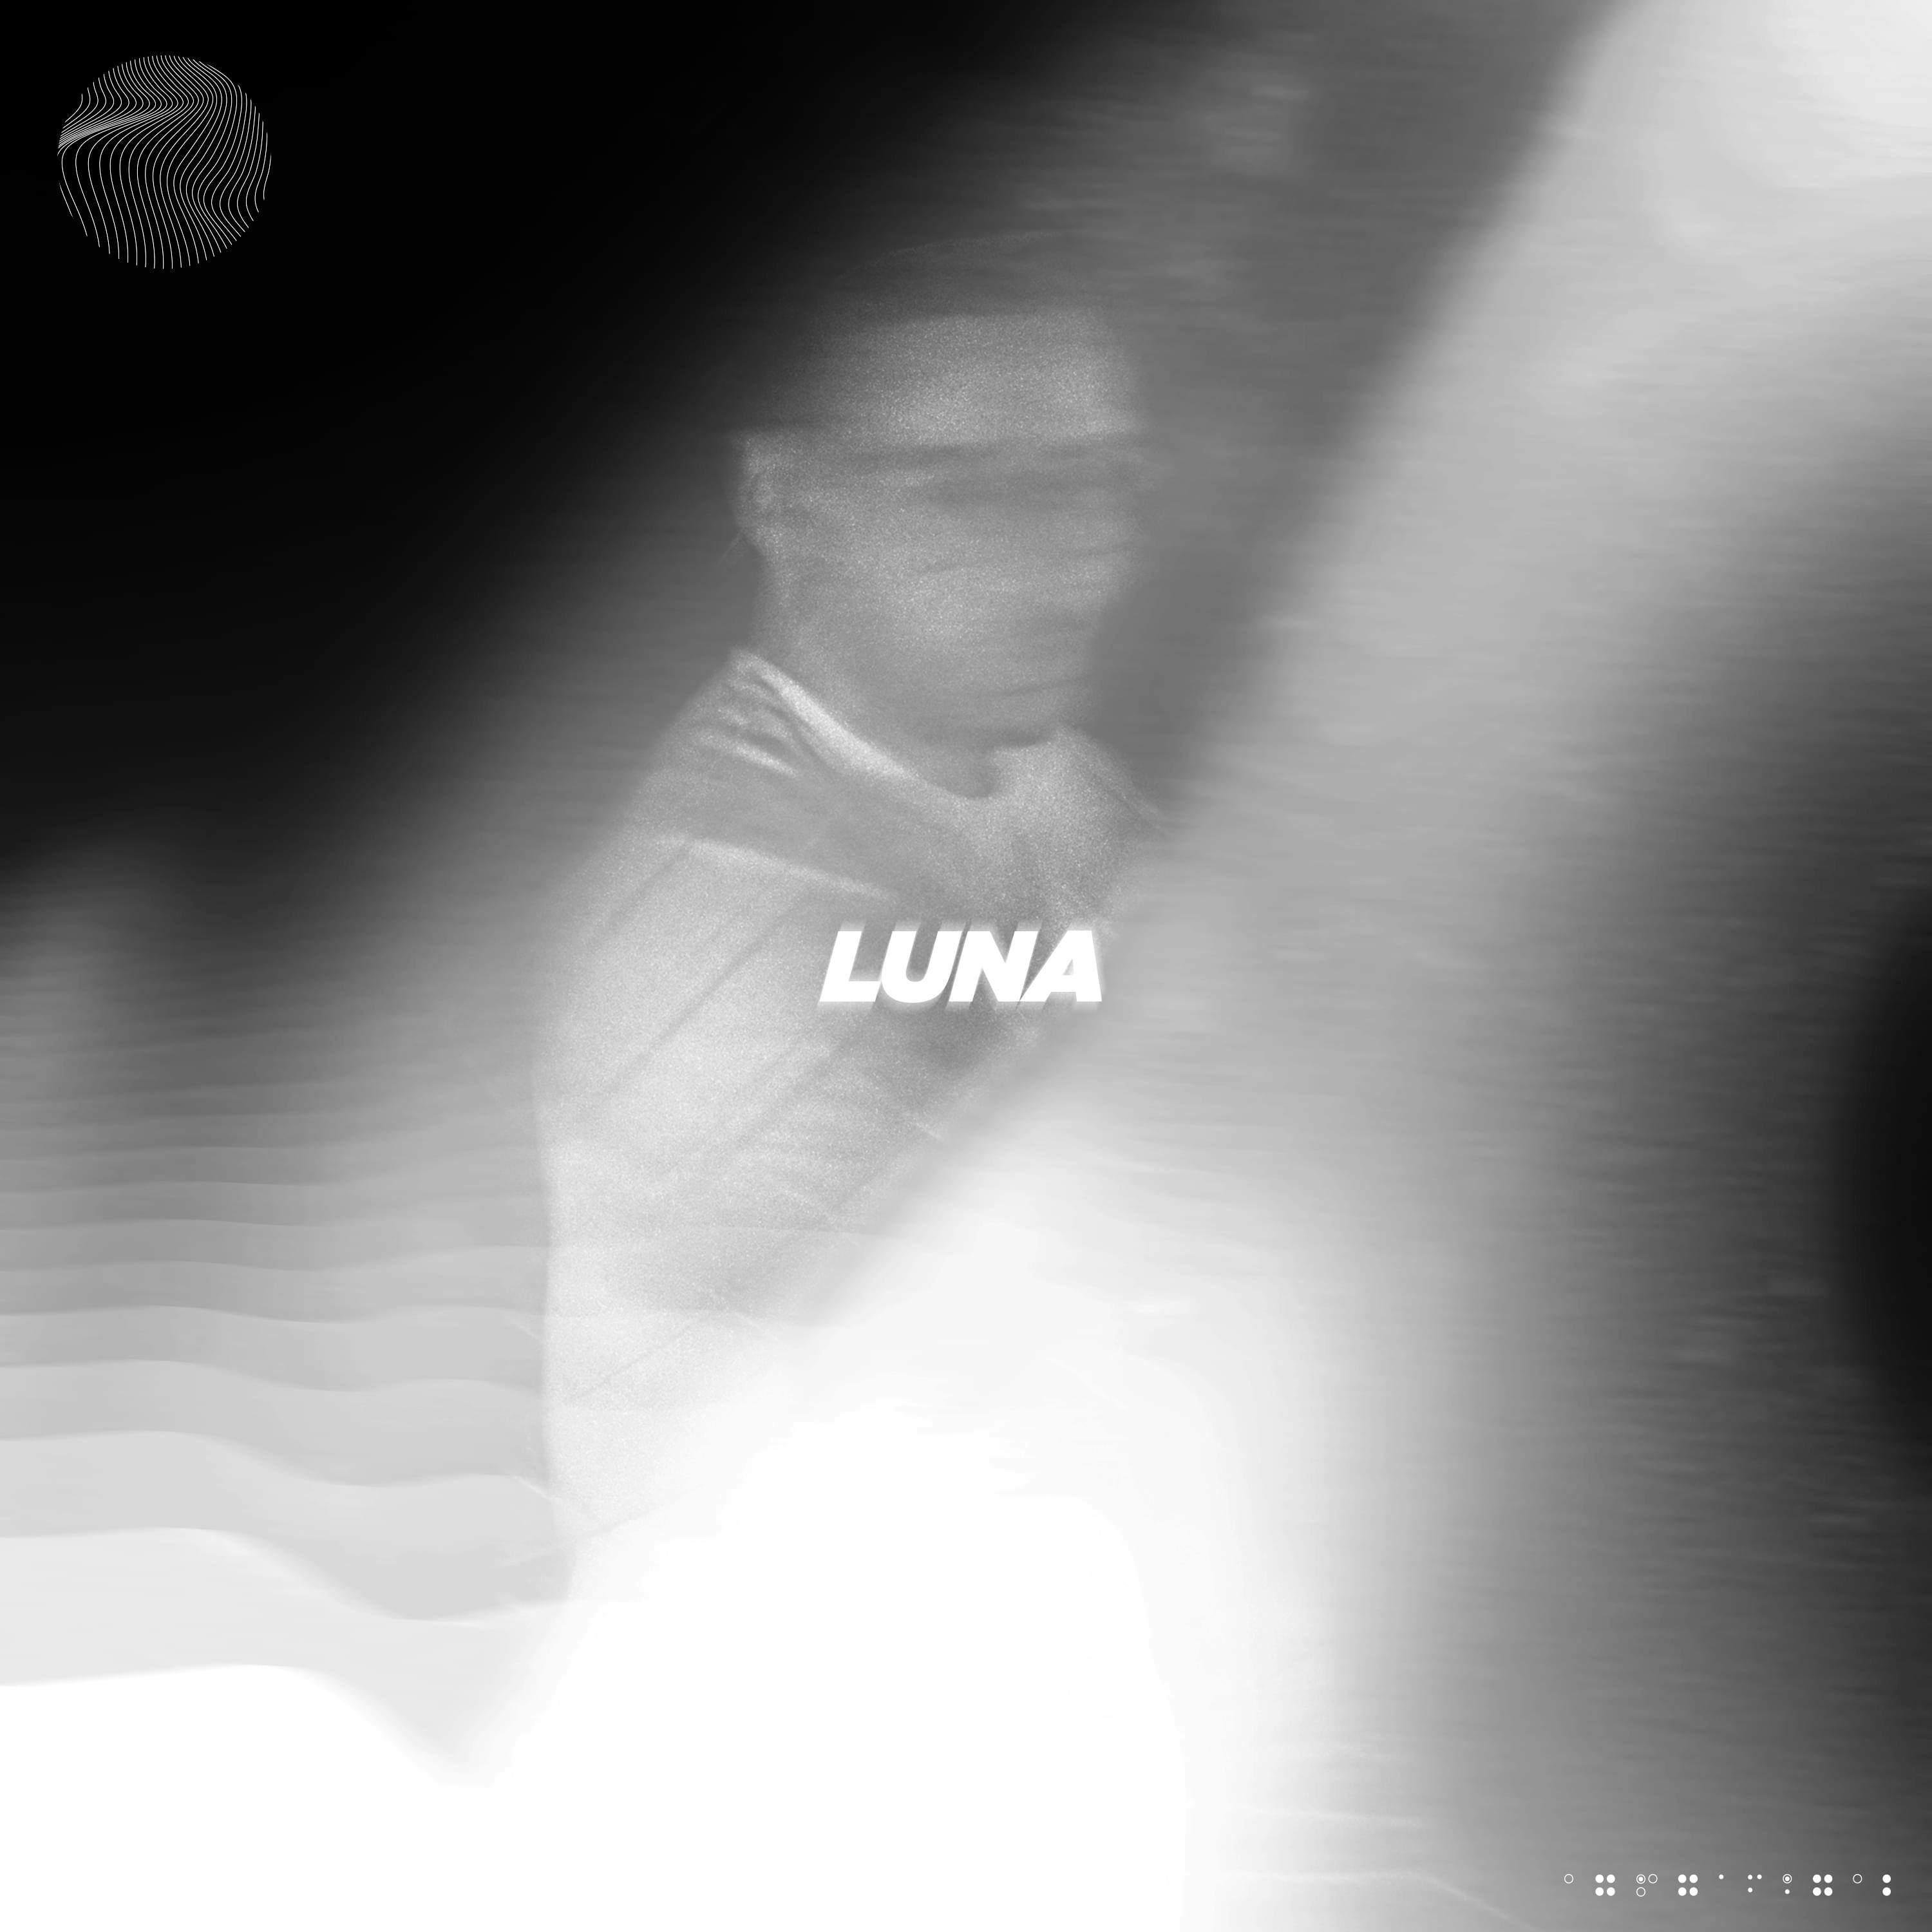 Cover art for Jon Waltz's song: LUNA